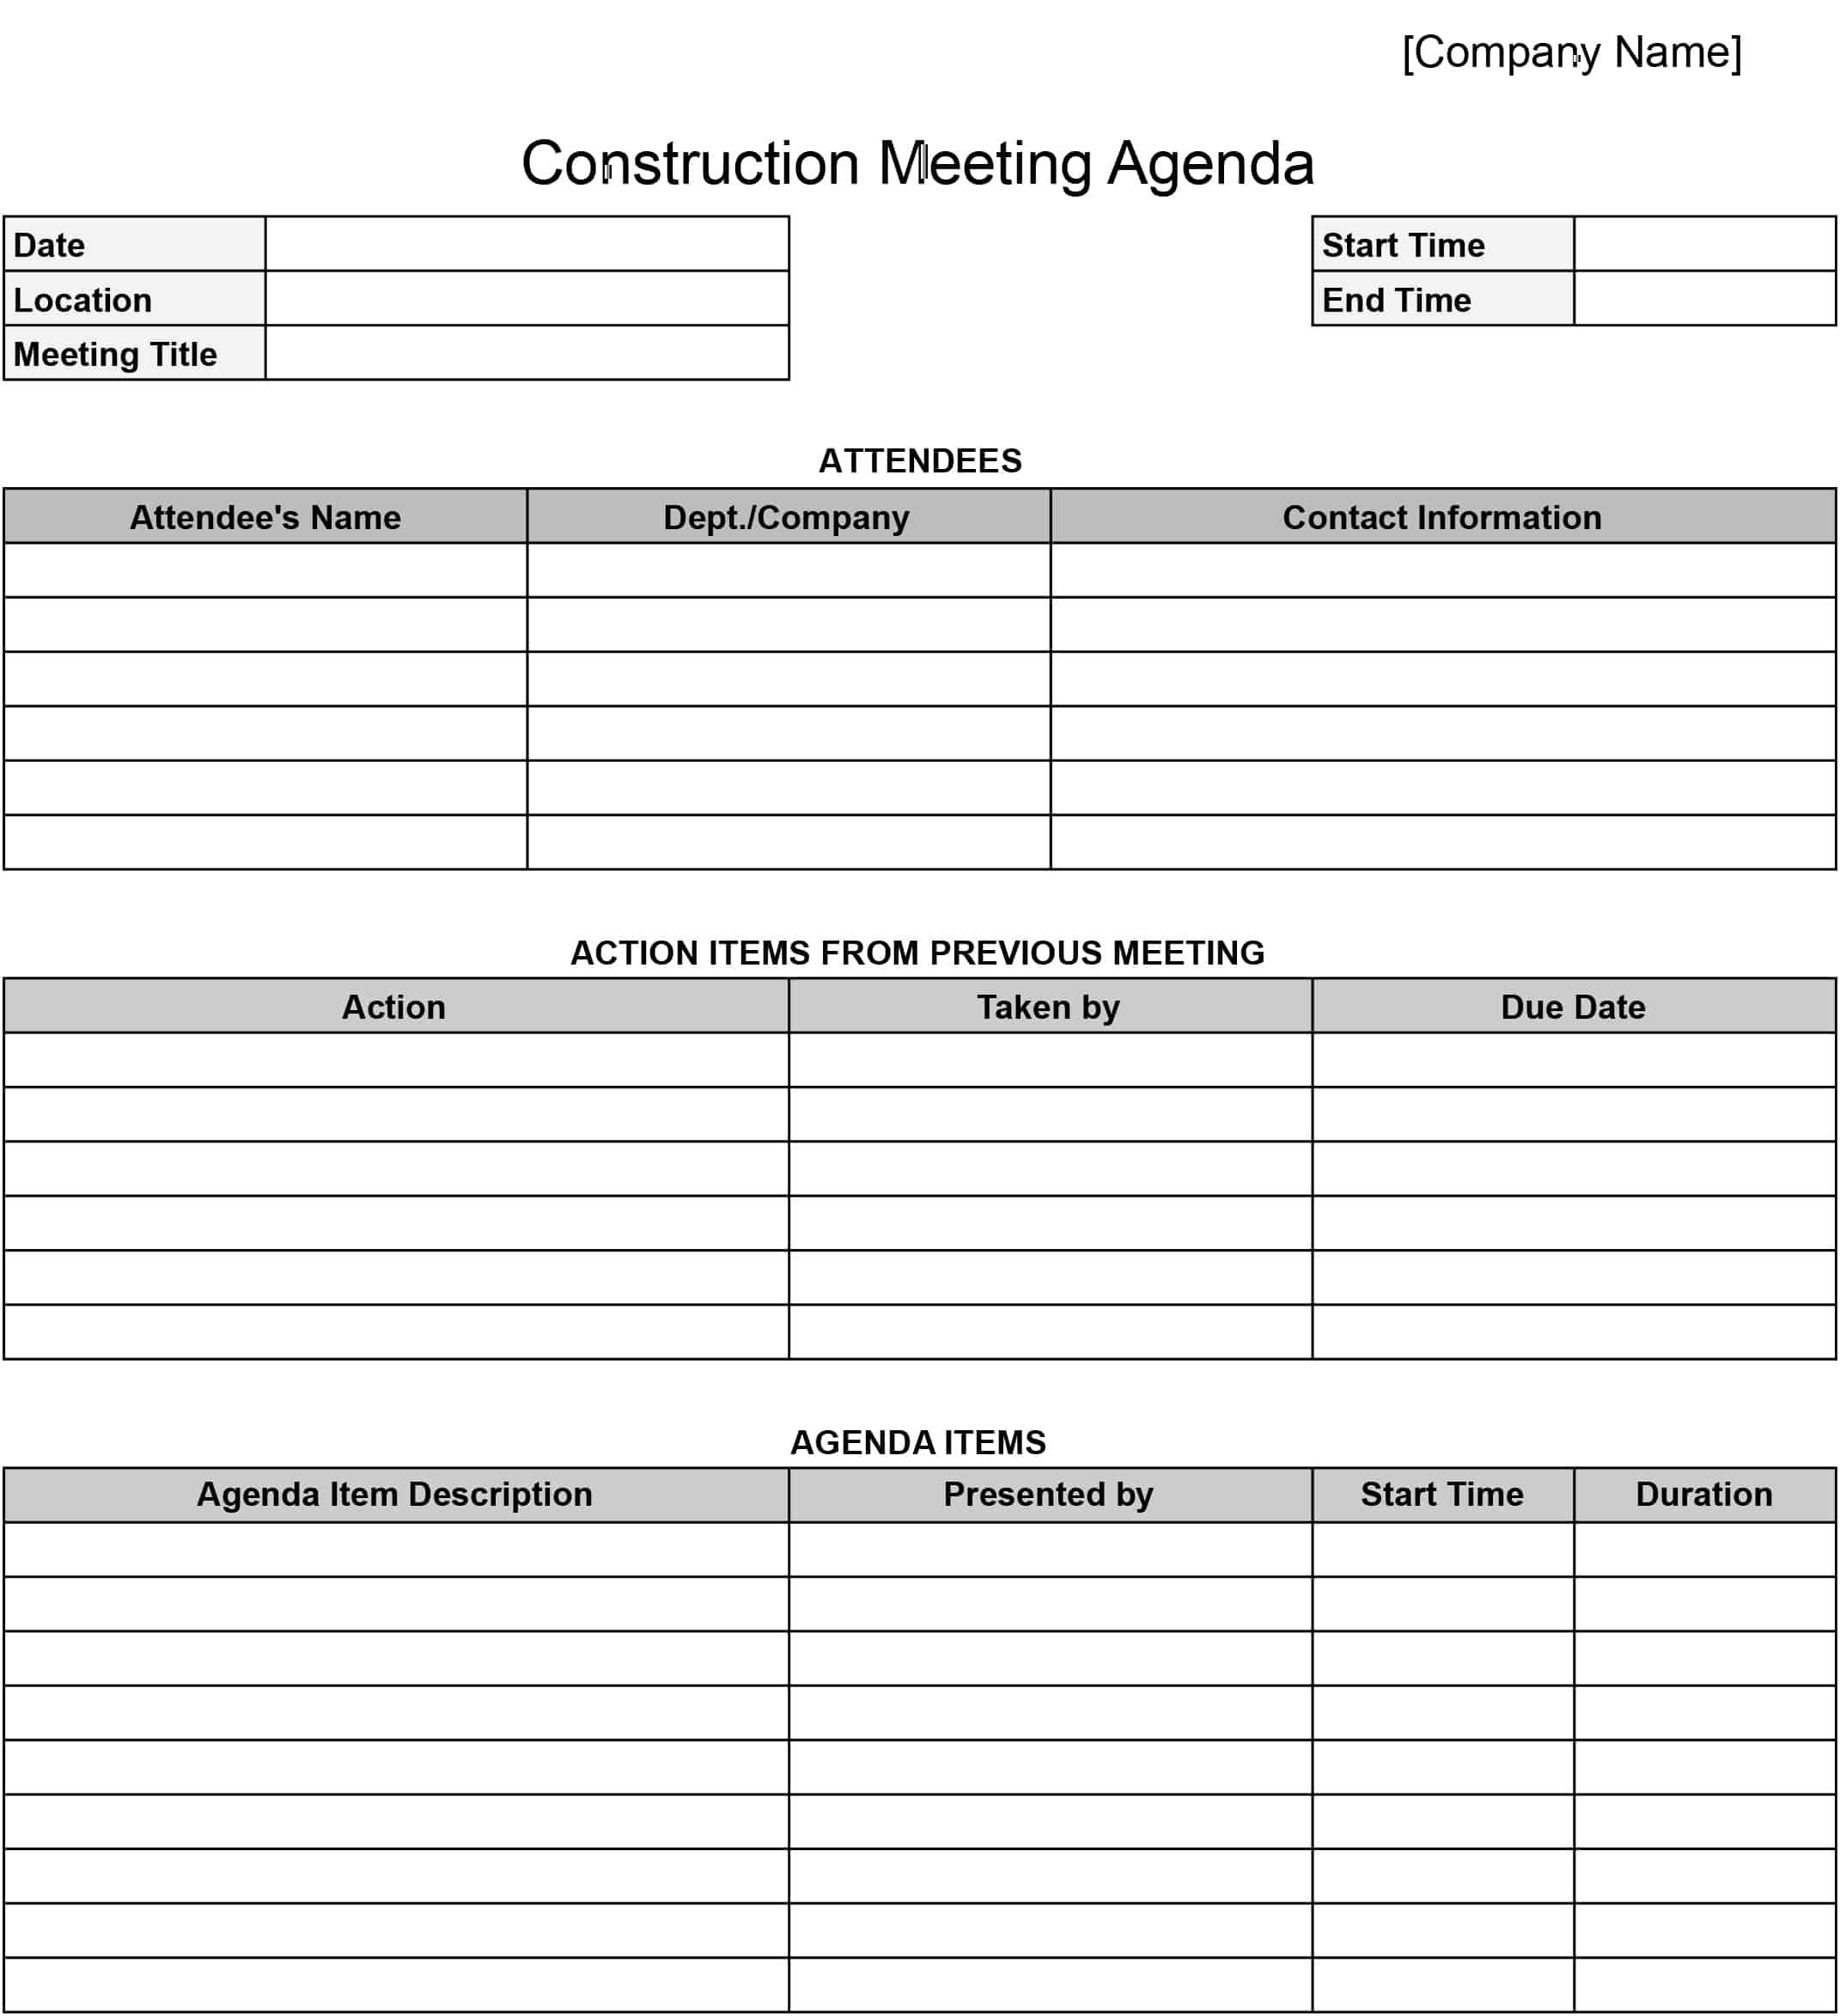 Construction Meeting Agenda